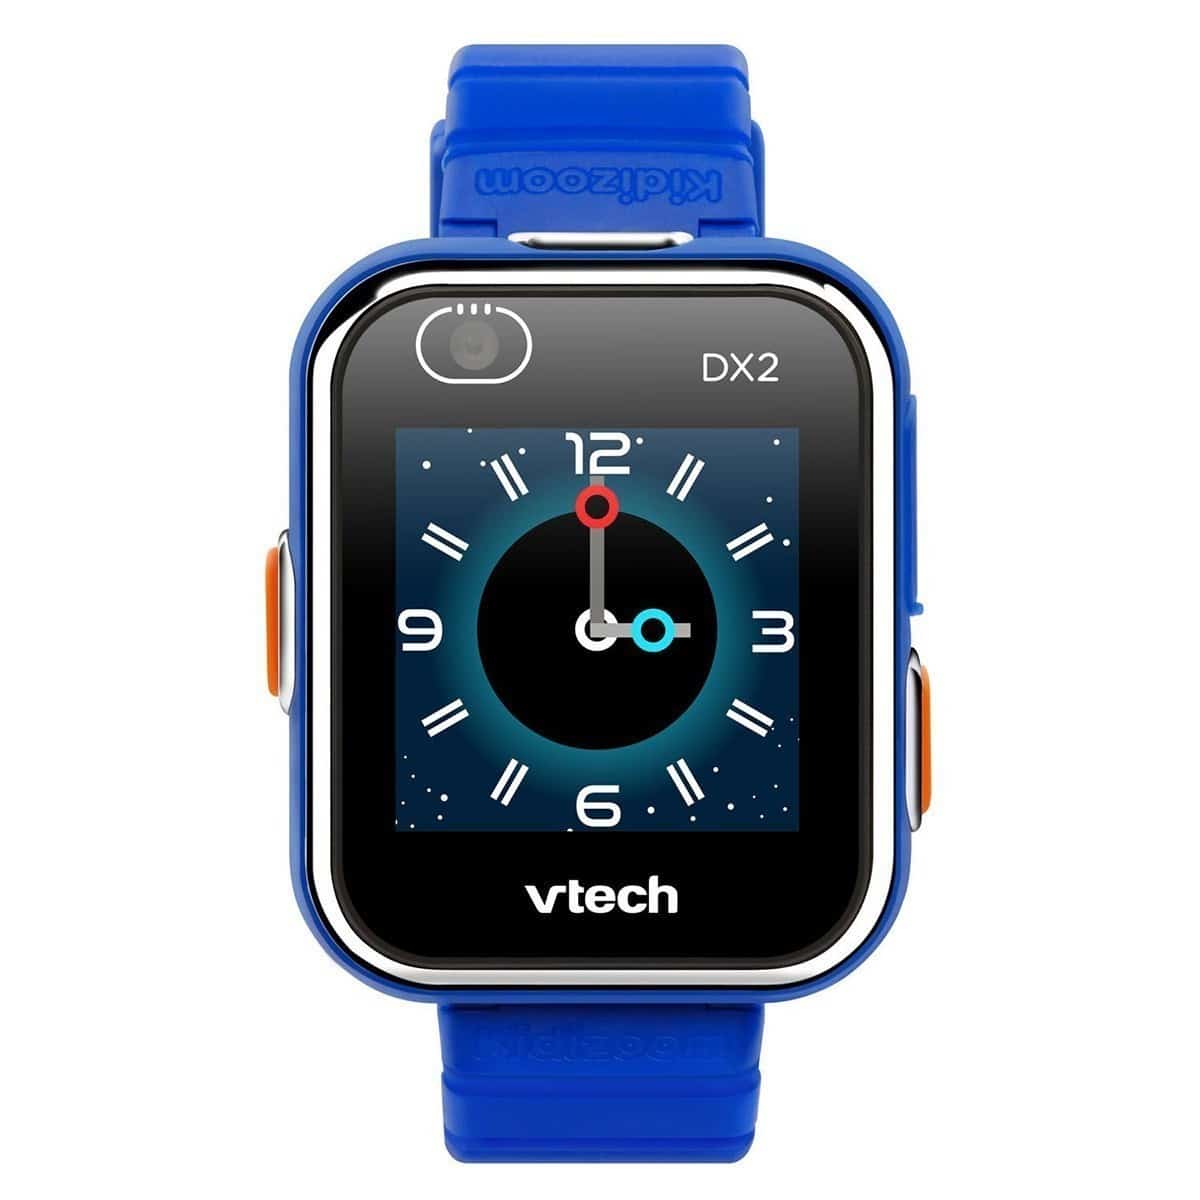 Vtech - Kidizoom Smart Watch DX 2 - Blue